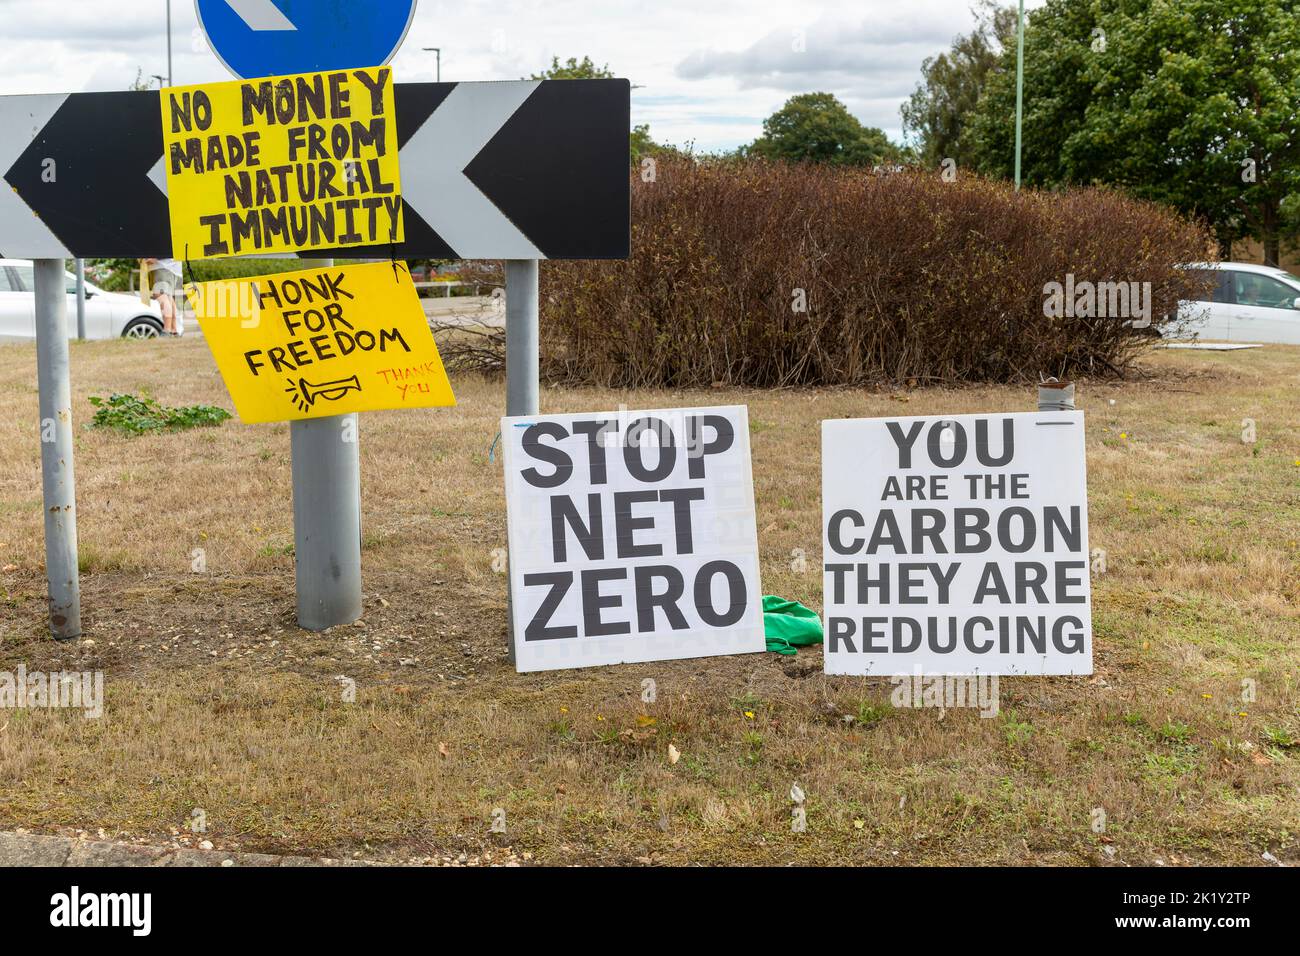 Manifestation à l'affluent rond-point, Martlesham, Suffolk, Angleterre, Royaume-Uni - Stop Net Zero, Hink for Freedom Banque D'Images